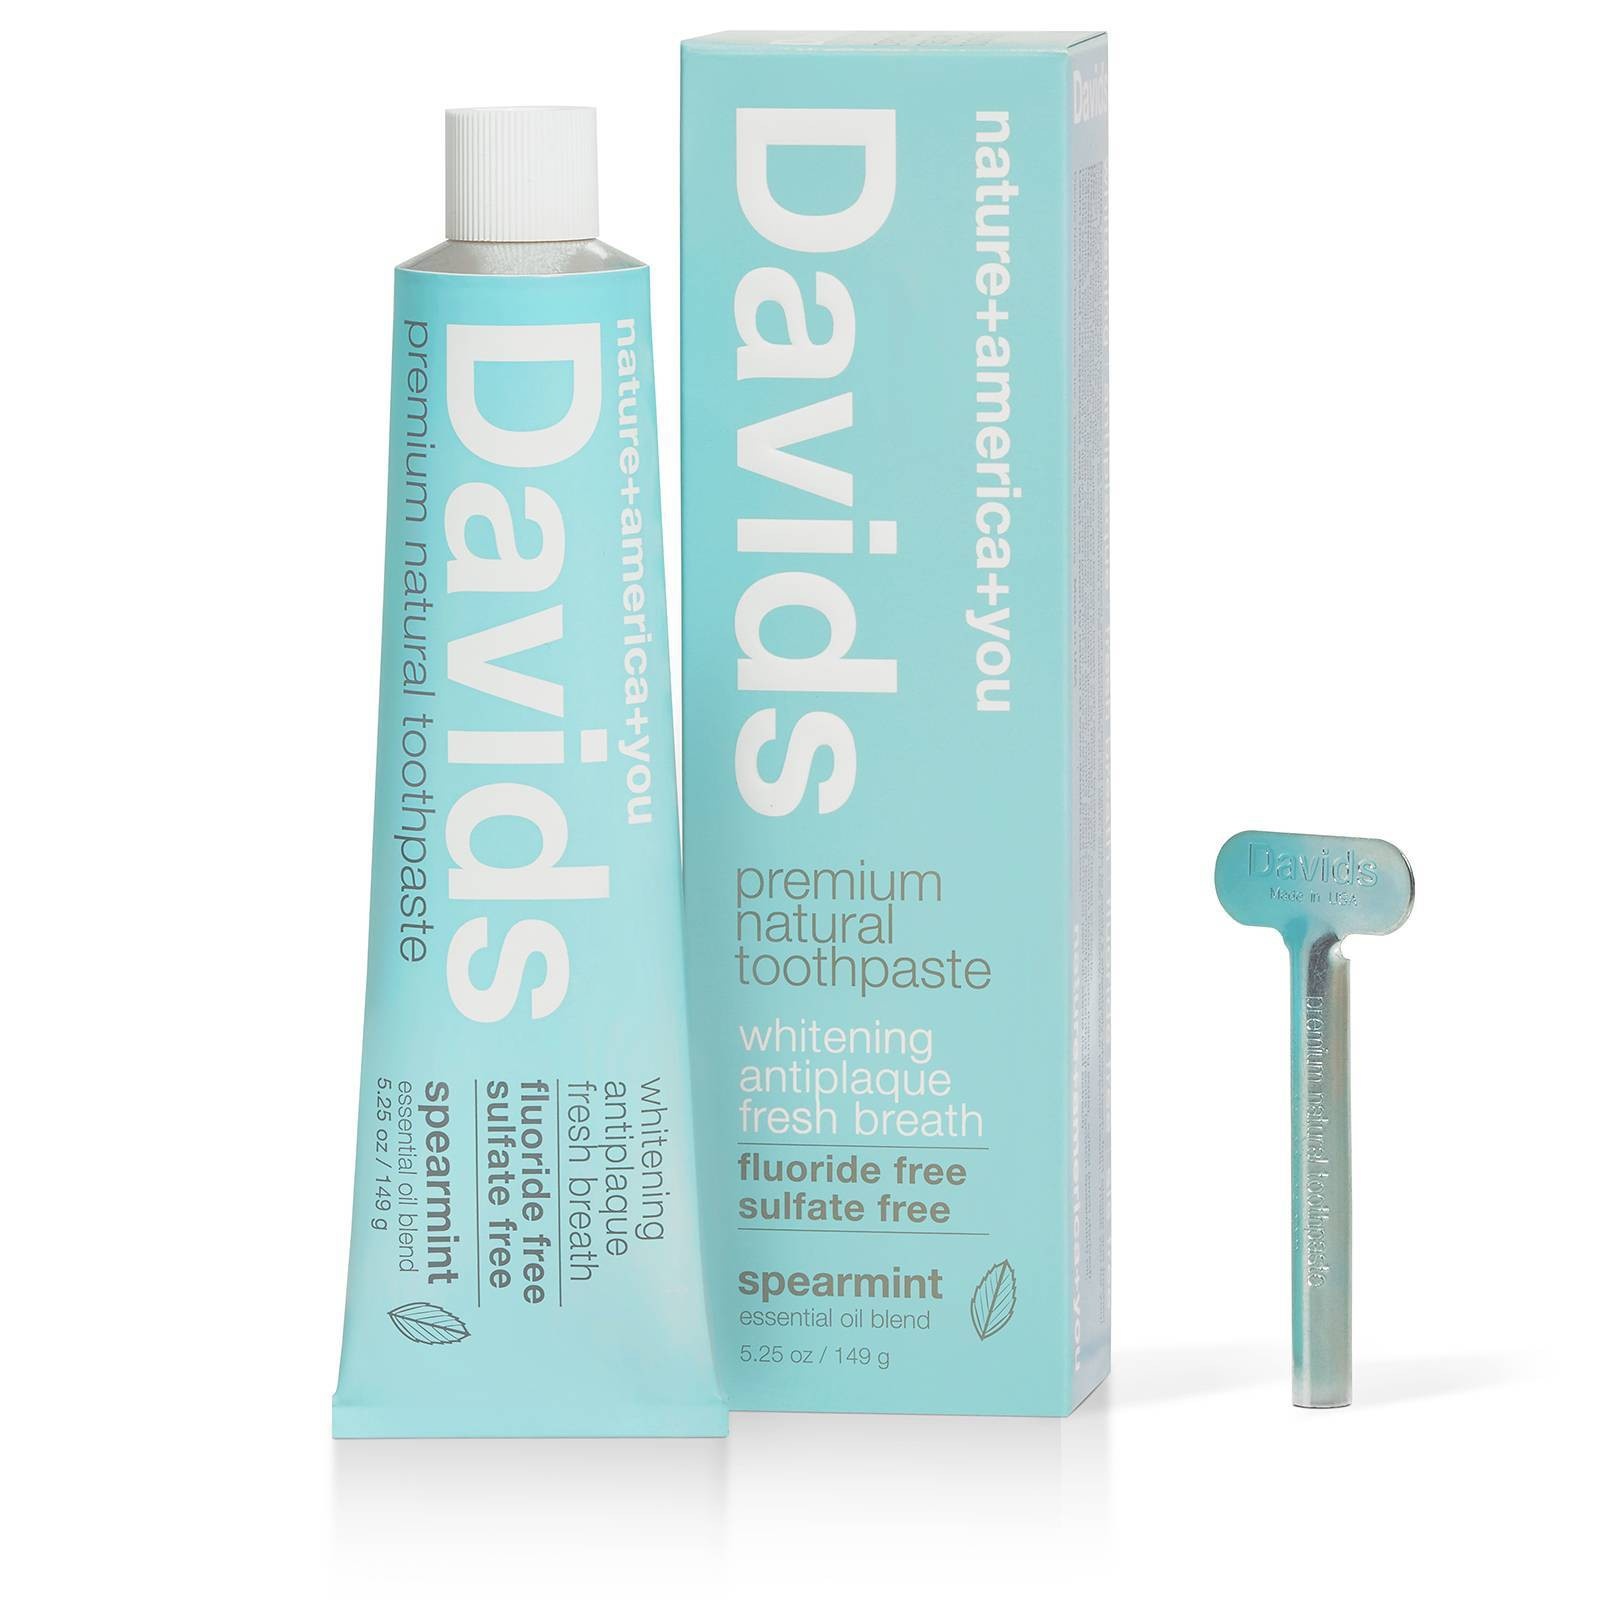 slide 1 of 7, Davids Antiplaque & Whitening Premium Natural Toothpaste Fluoride Free Spearmint, 5.25 oz